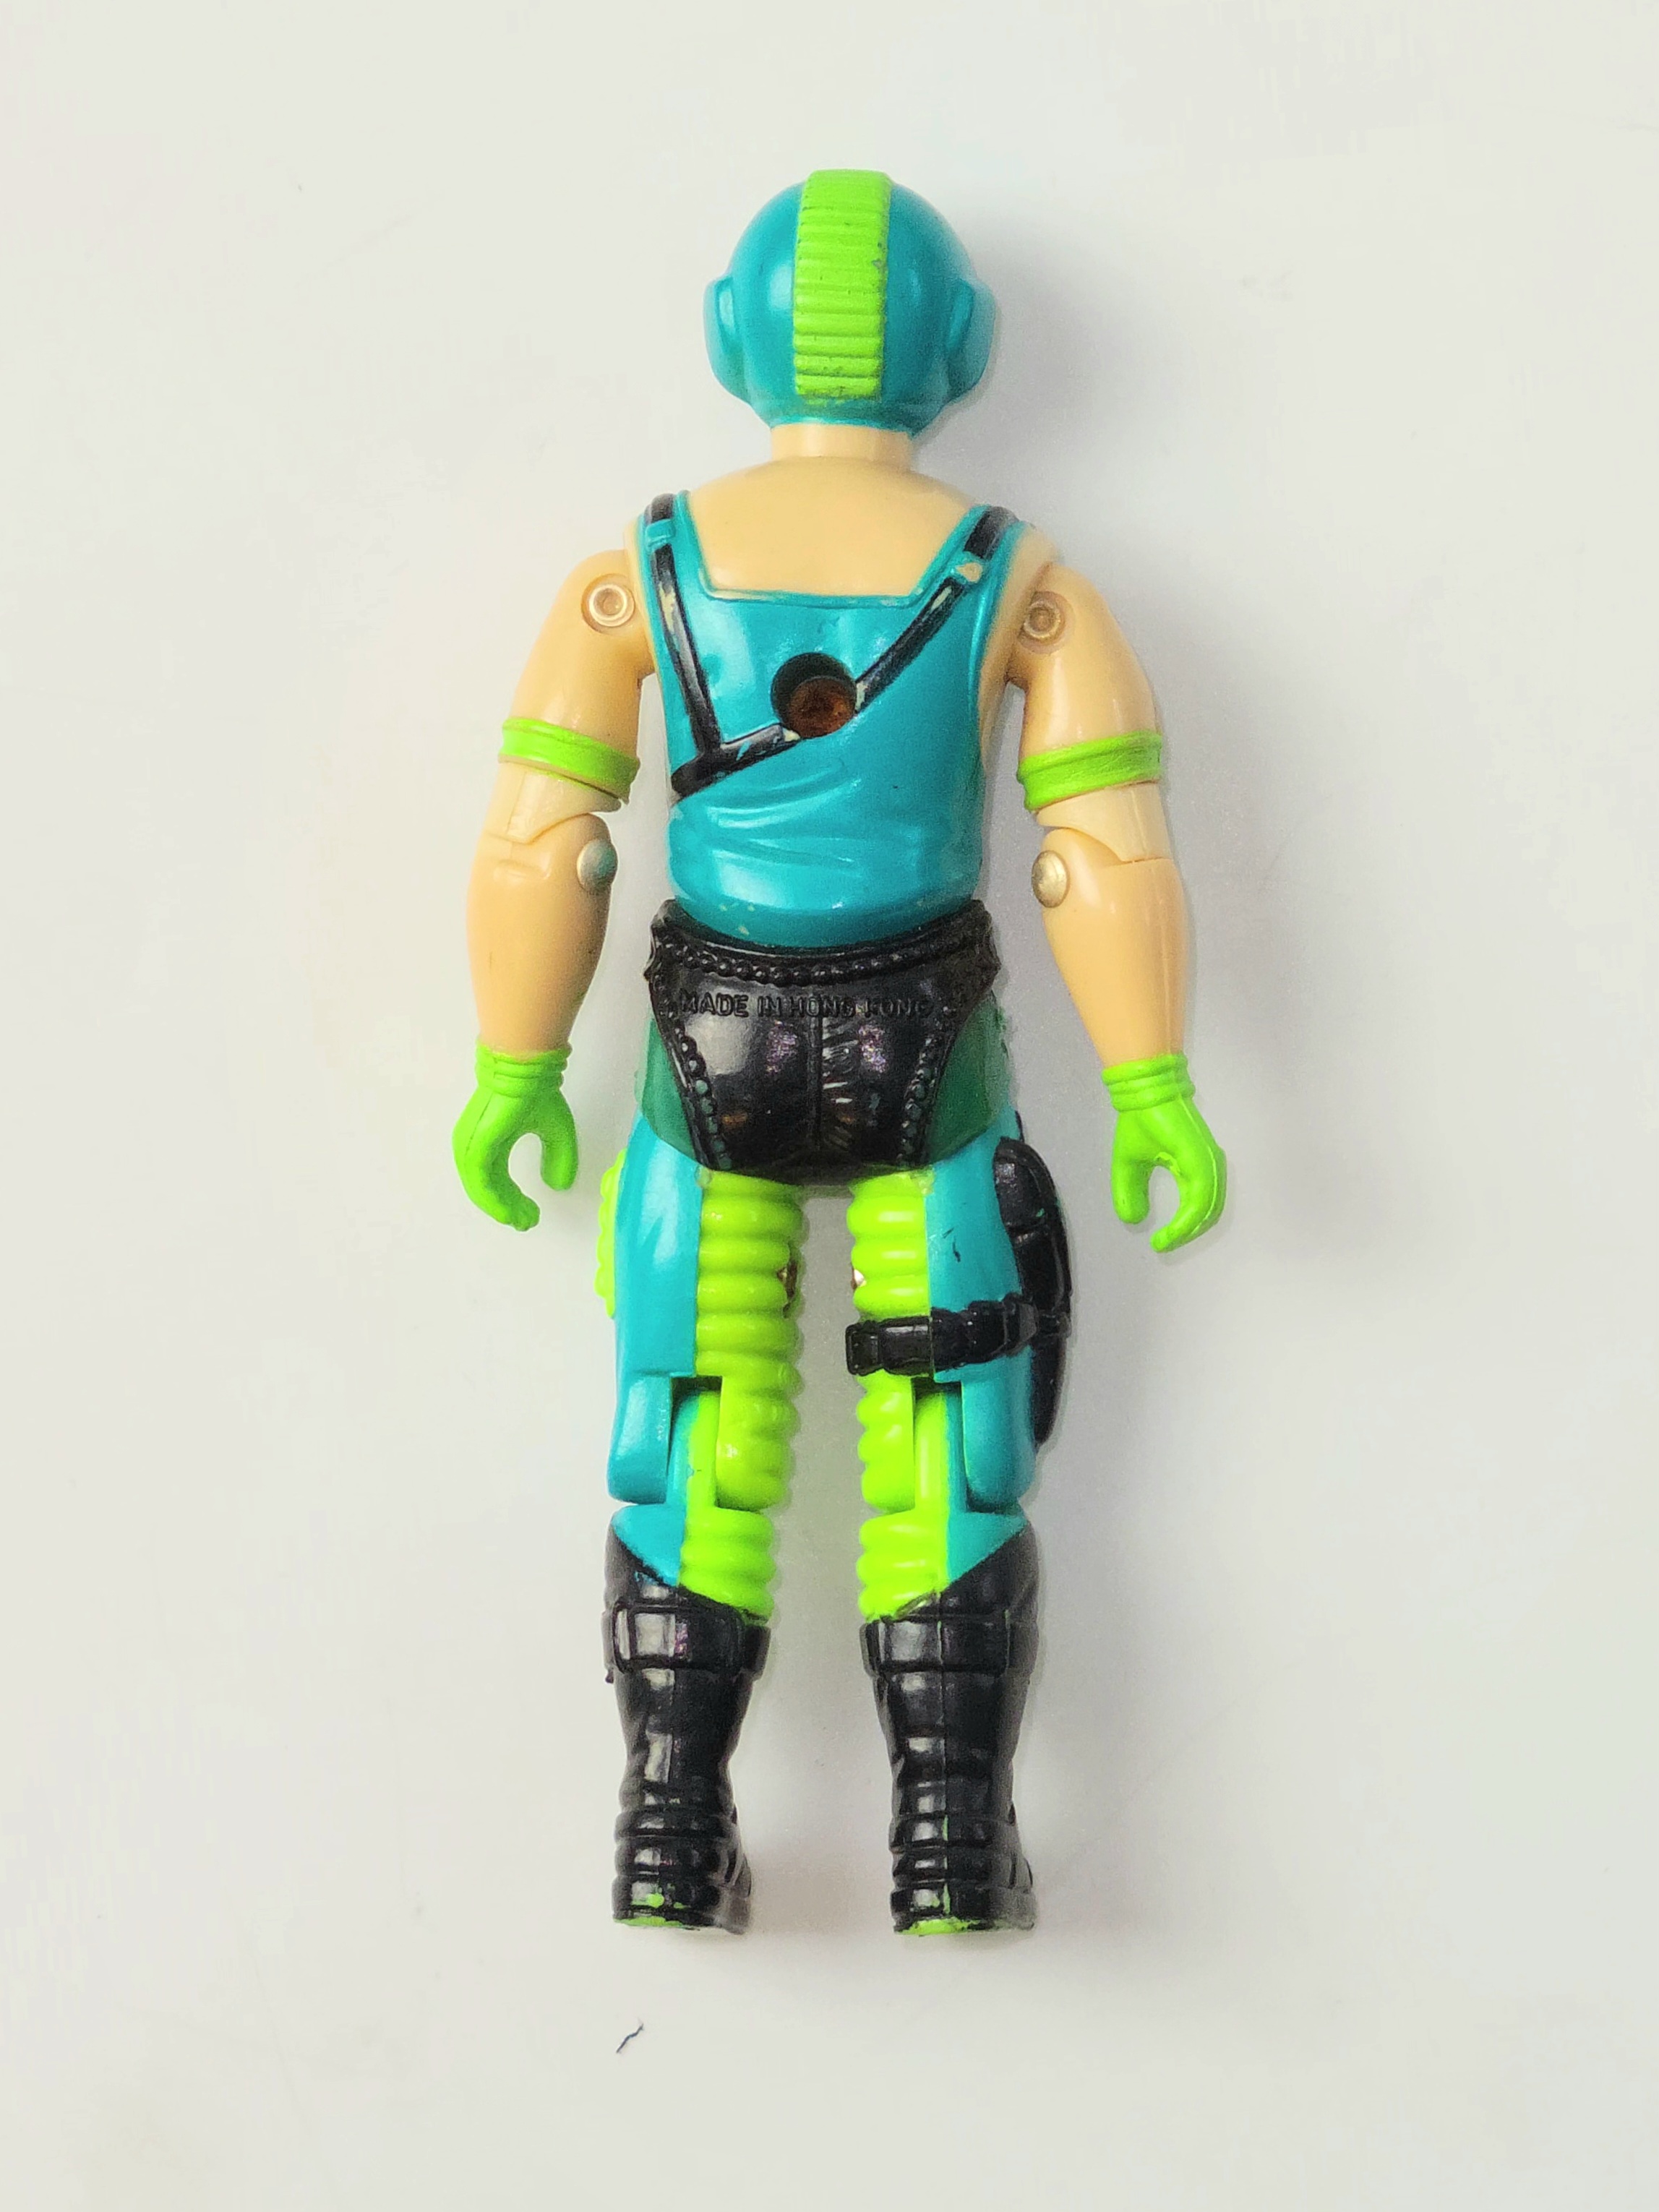 GI Joe Copperhead 1984 Action Figure Toy